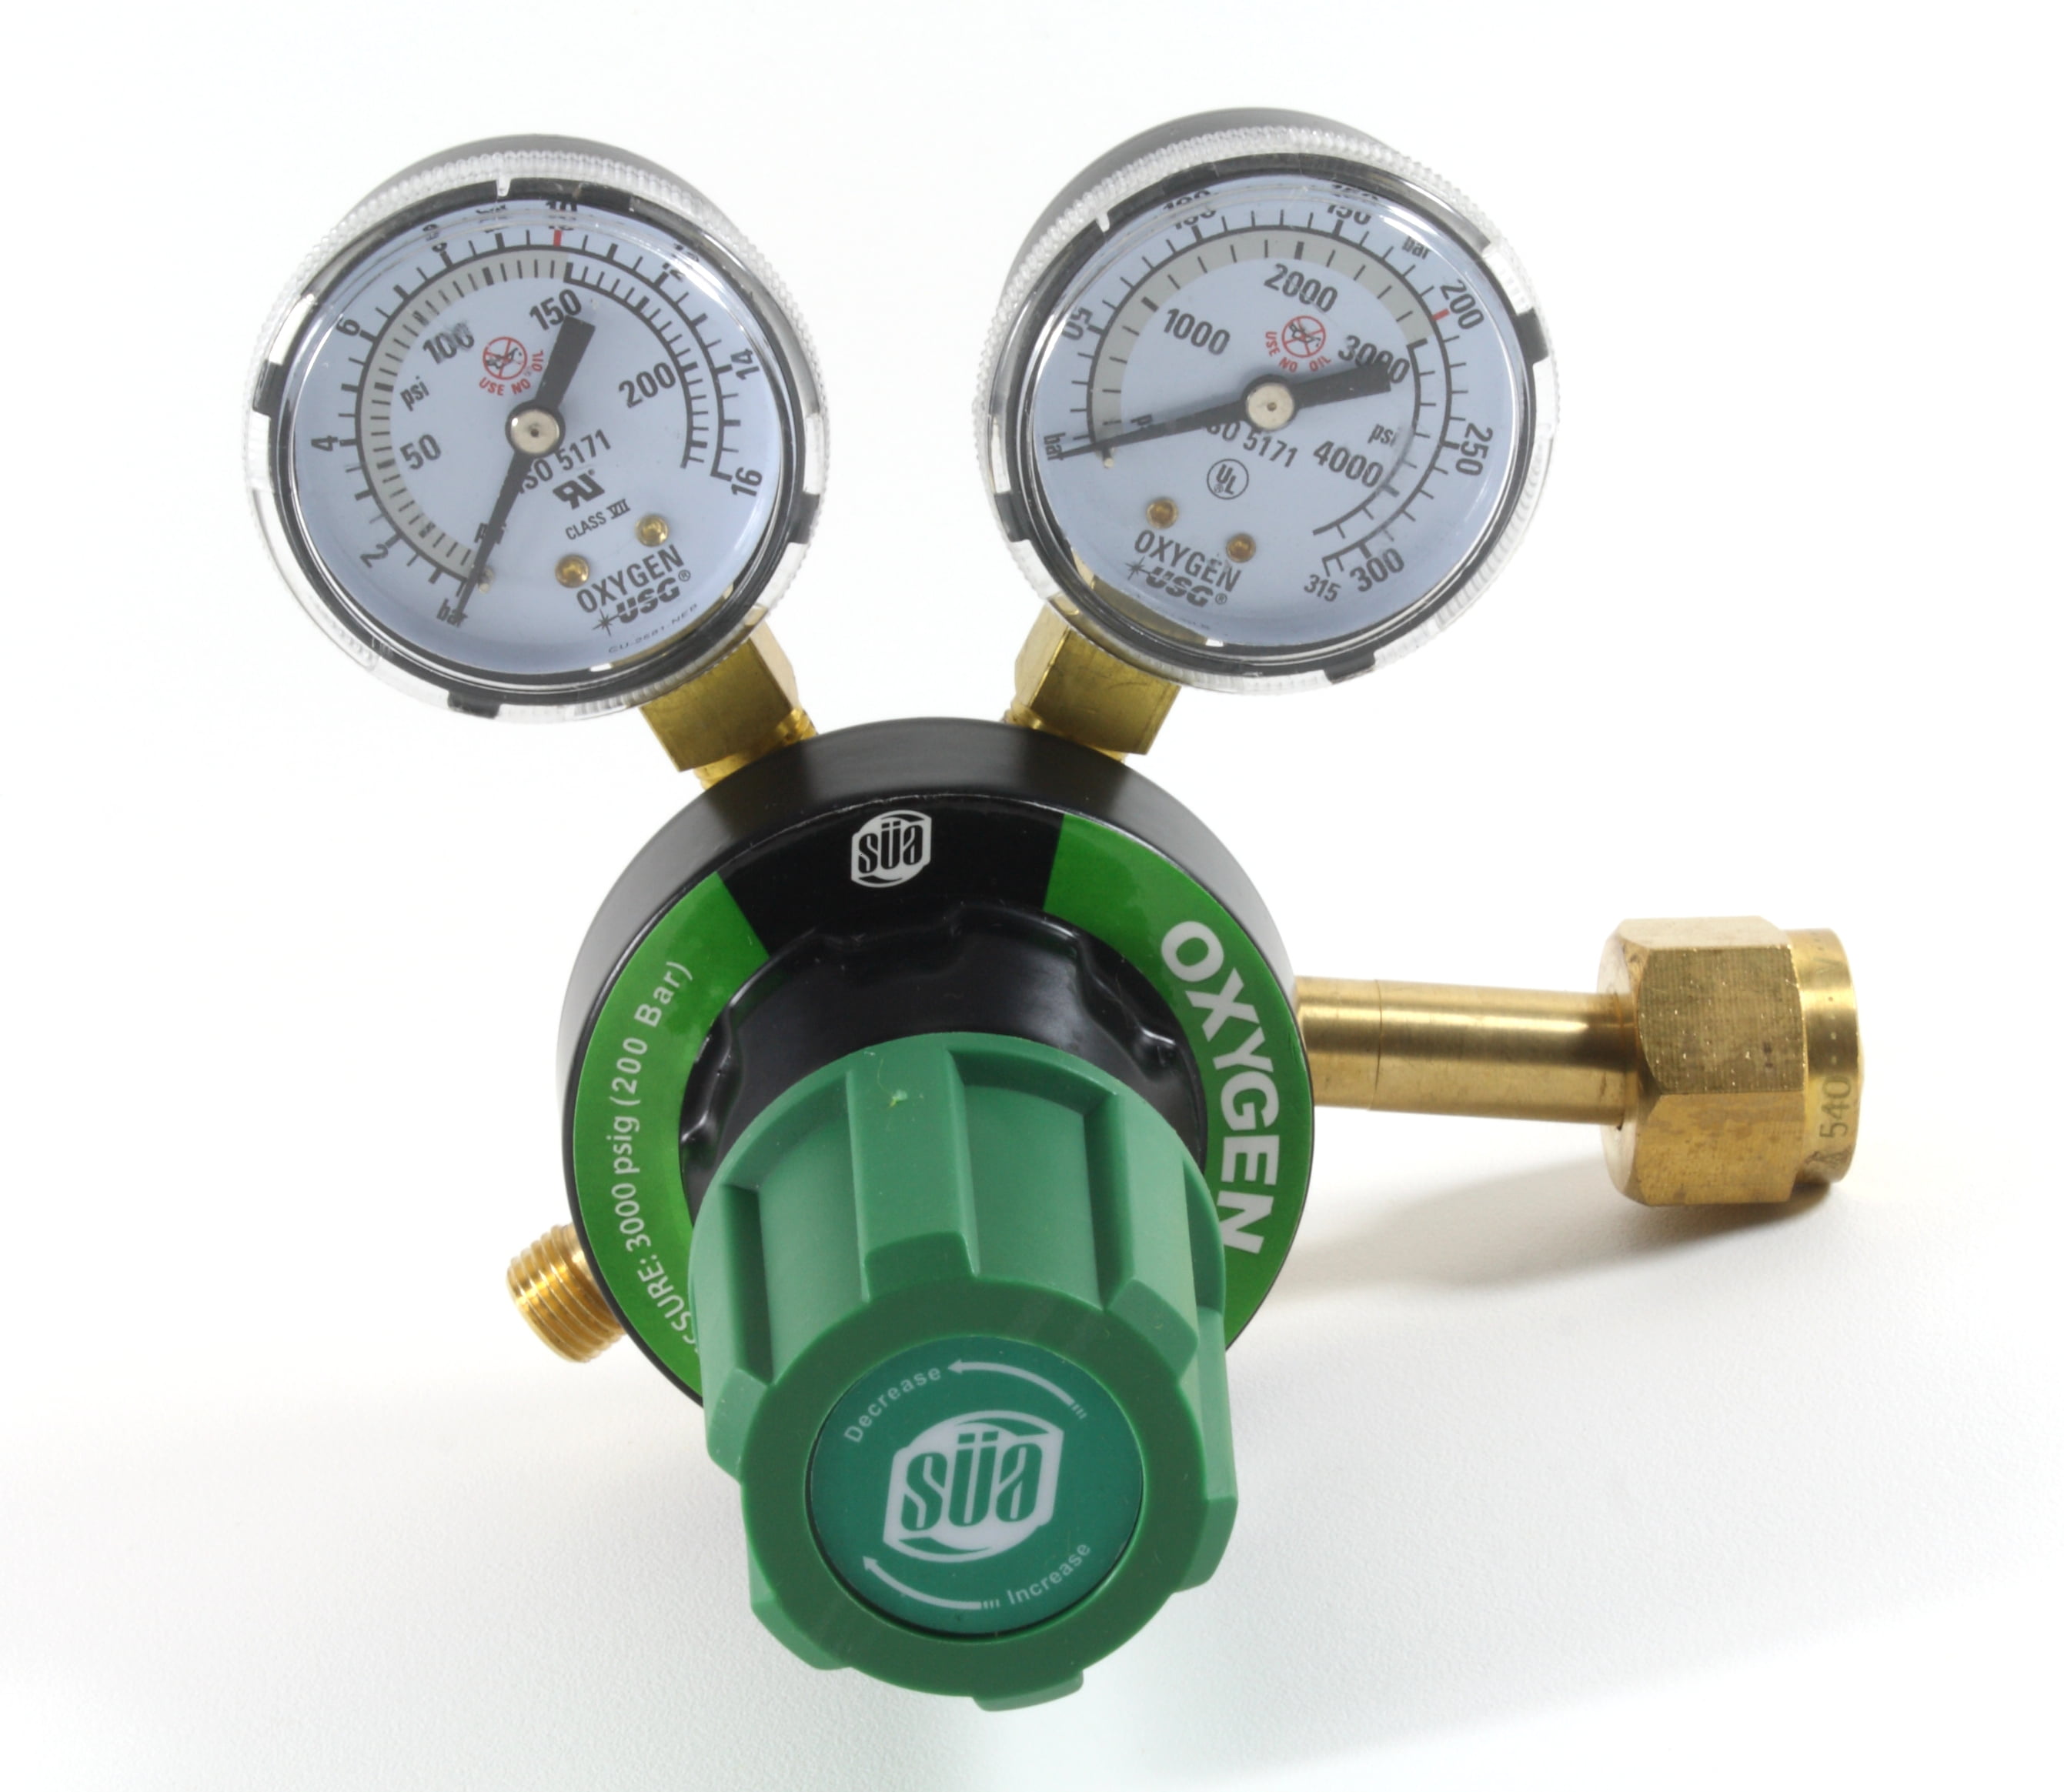 findmall CGA 540 Oxygen Regulator for Welding Gas Gauge 145PSI Delivery Range 